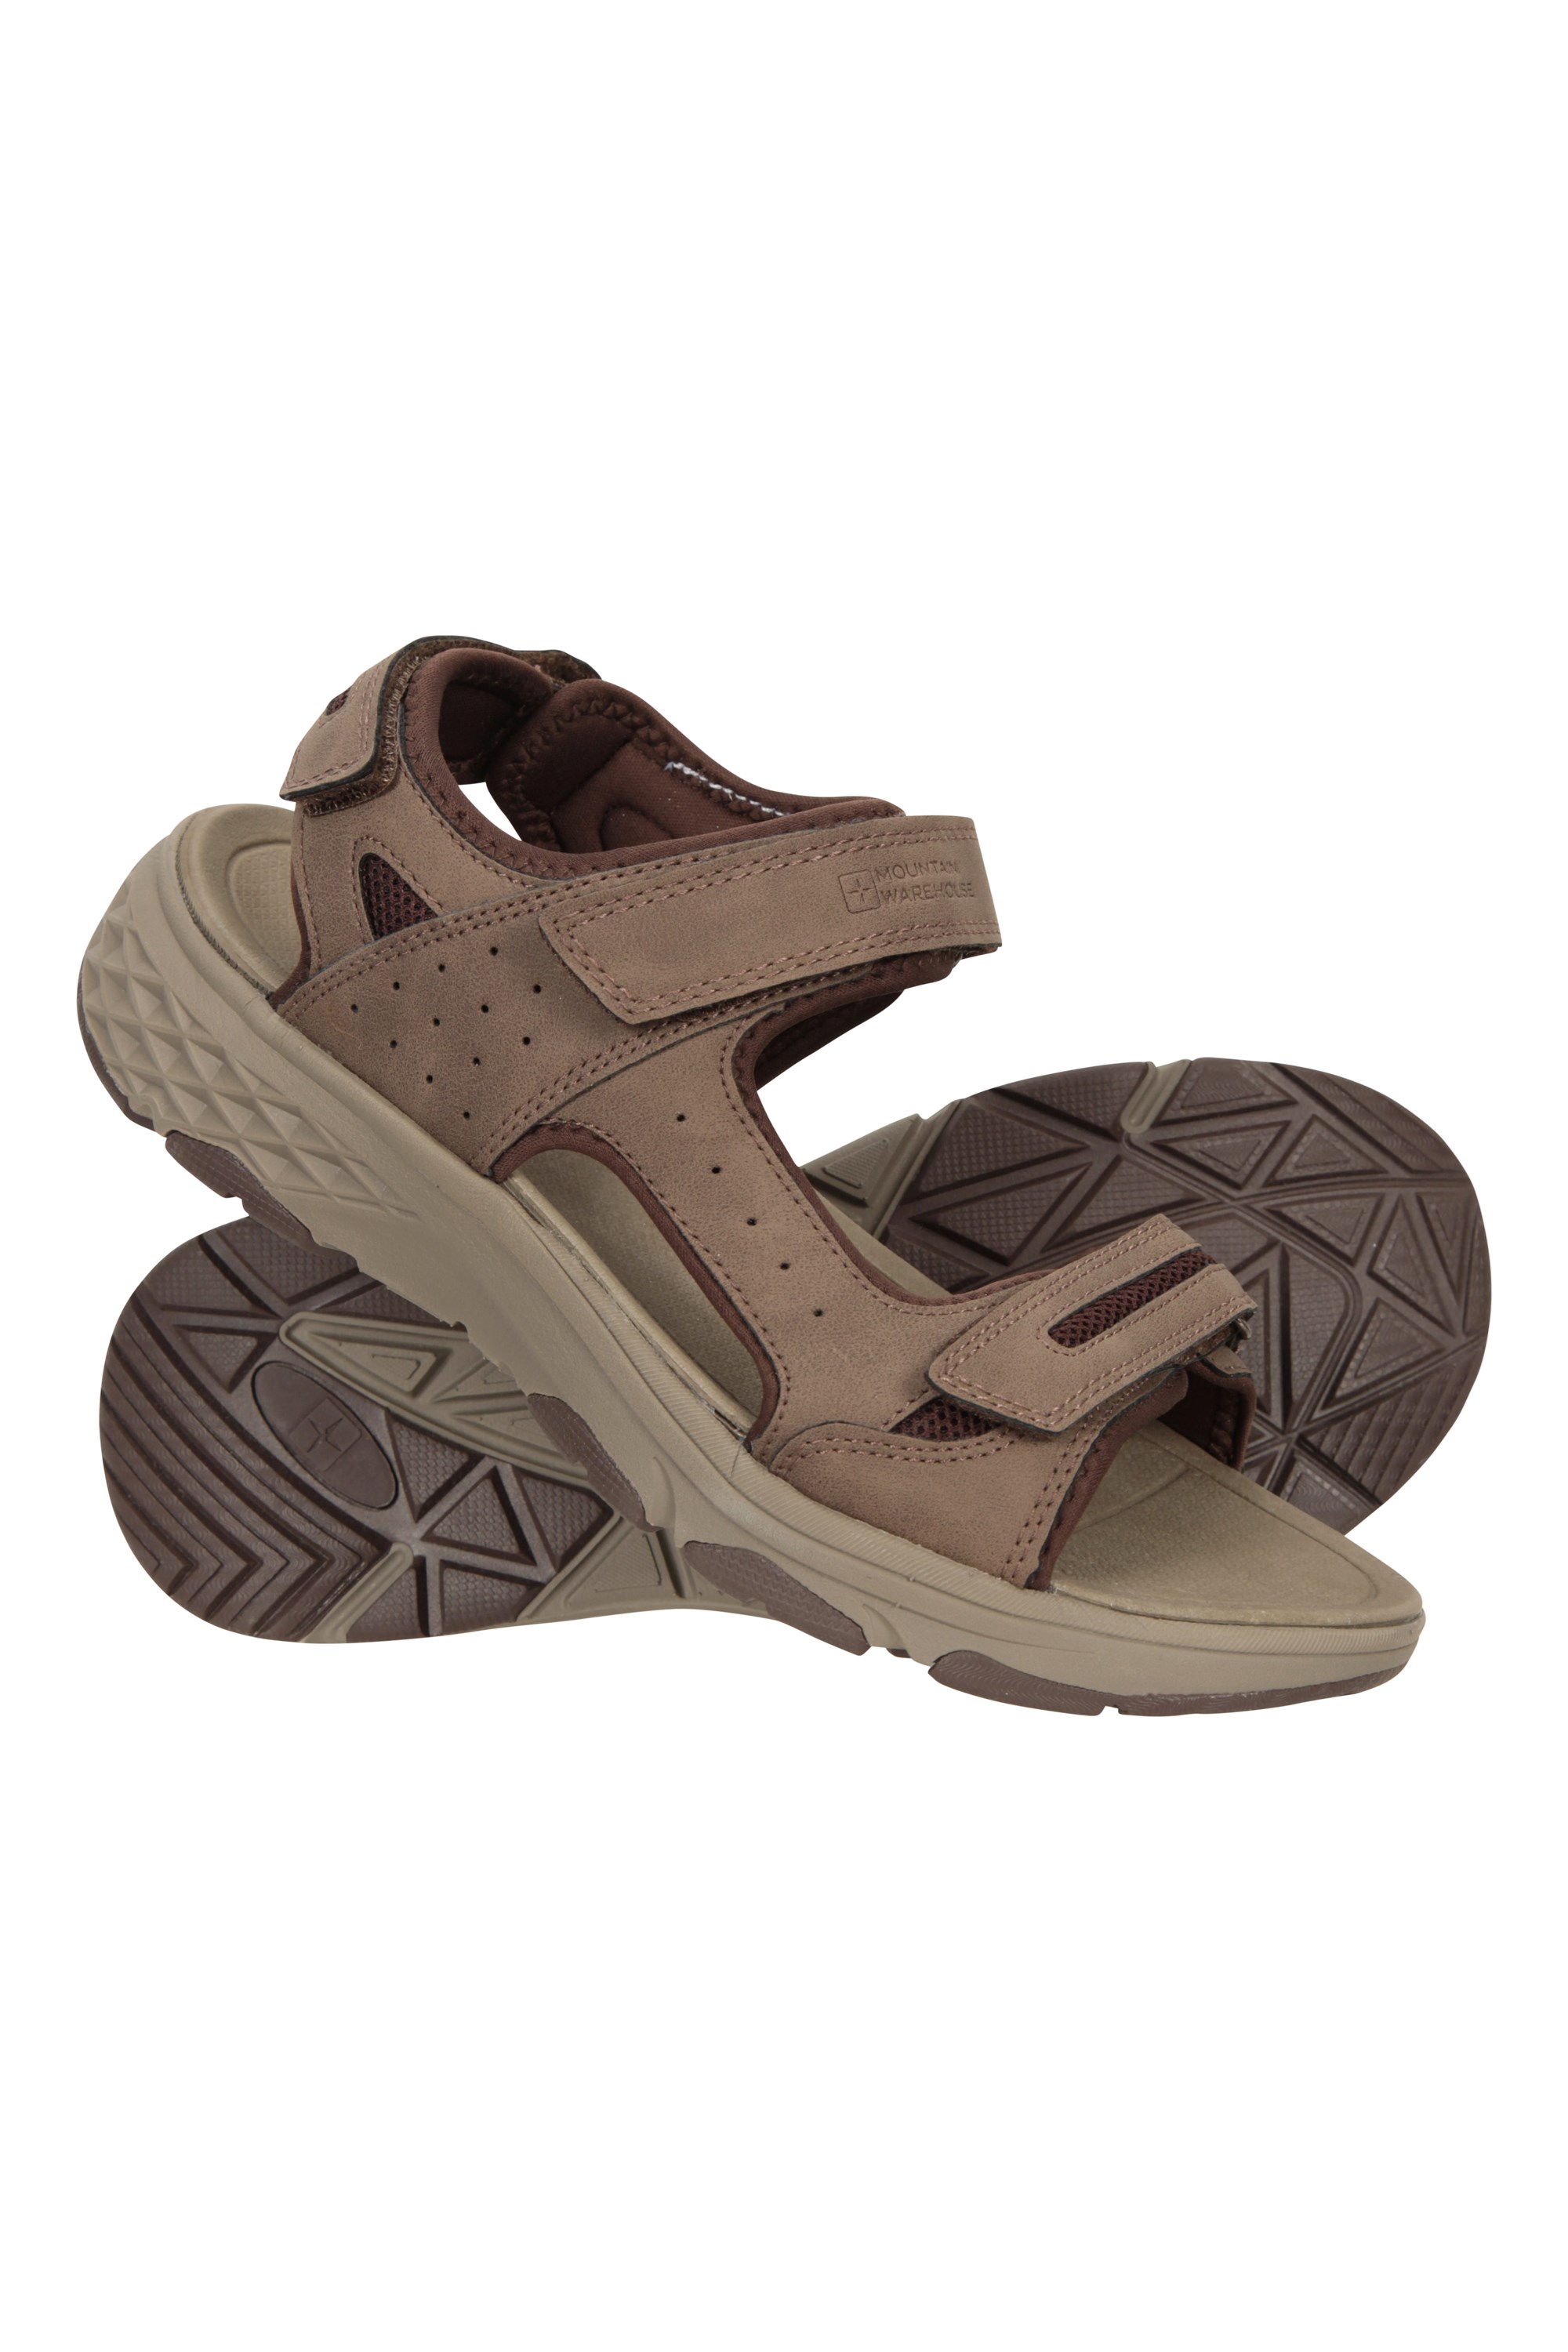 Mountain Warehouse Mens Summer Sandals Slip-On Seamless Comfort in Navy 